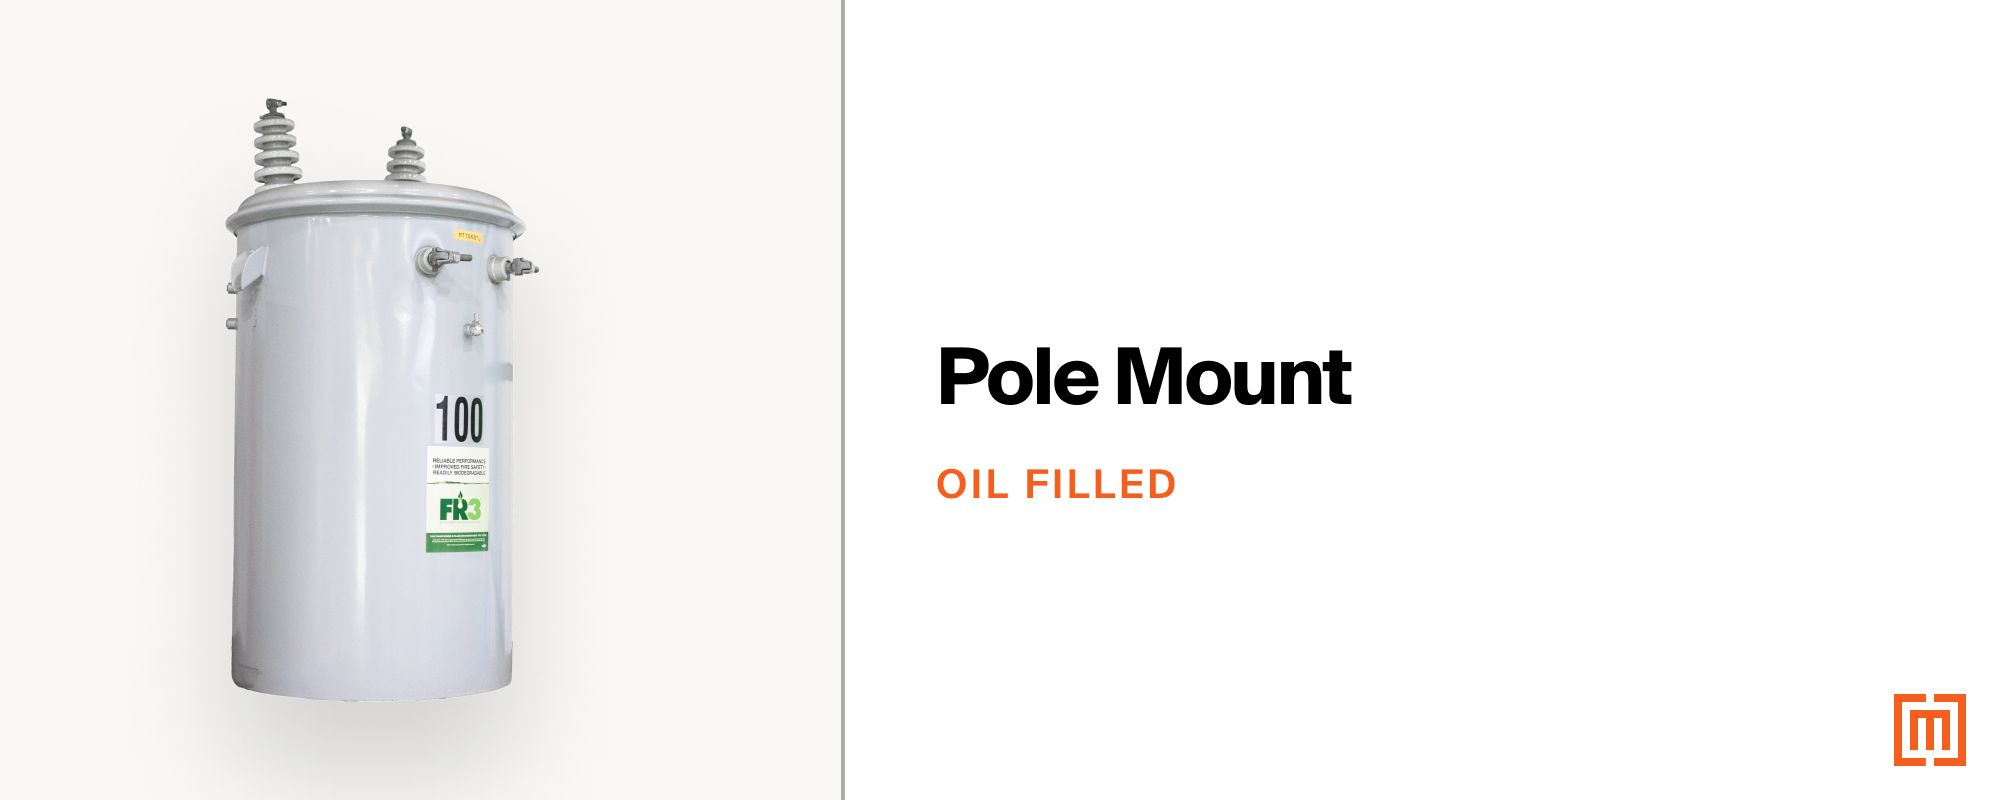 An oil filled pole mount transformer